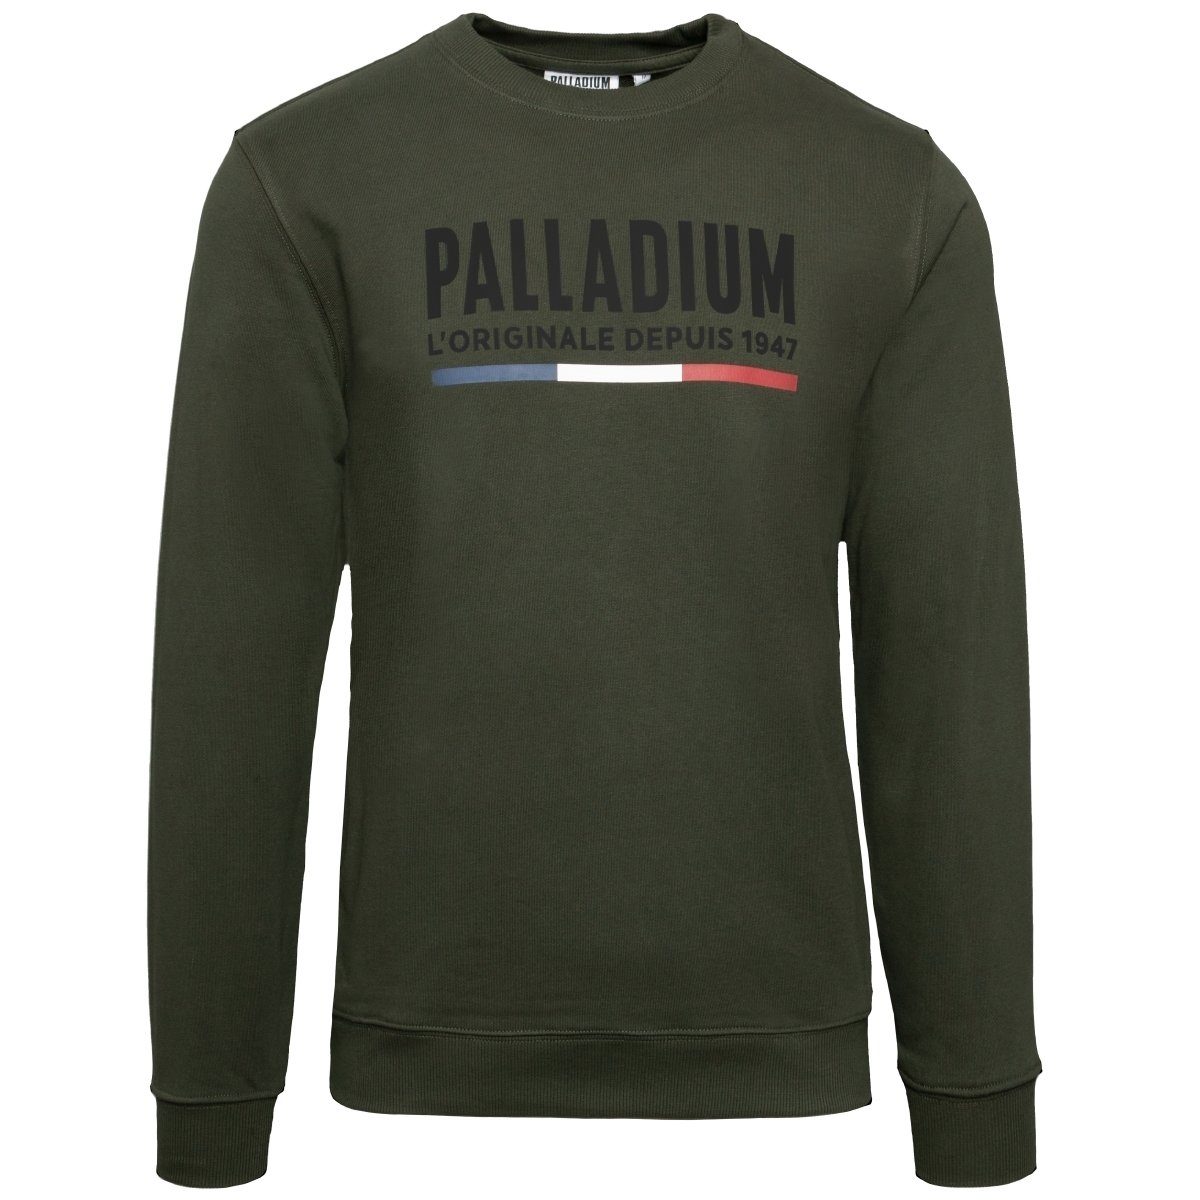 Palladium Sweatshirt Originale France Herren gruen